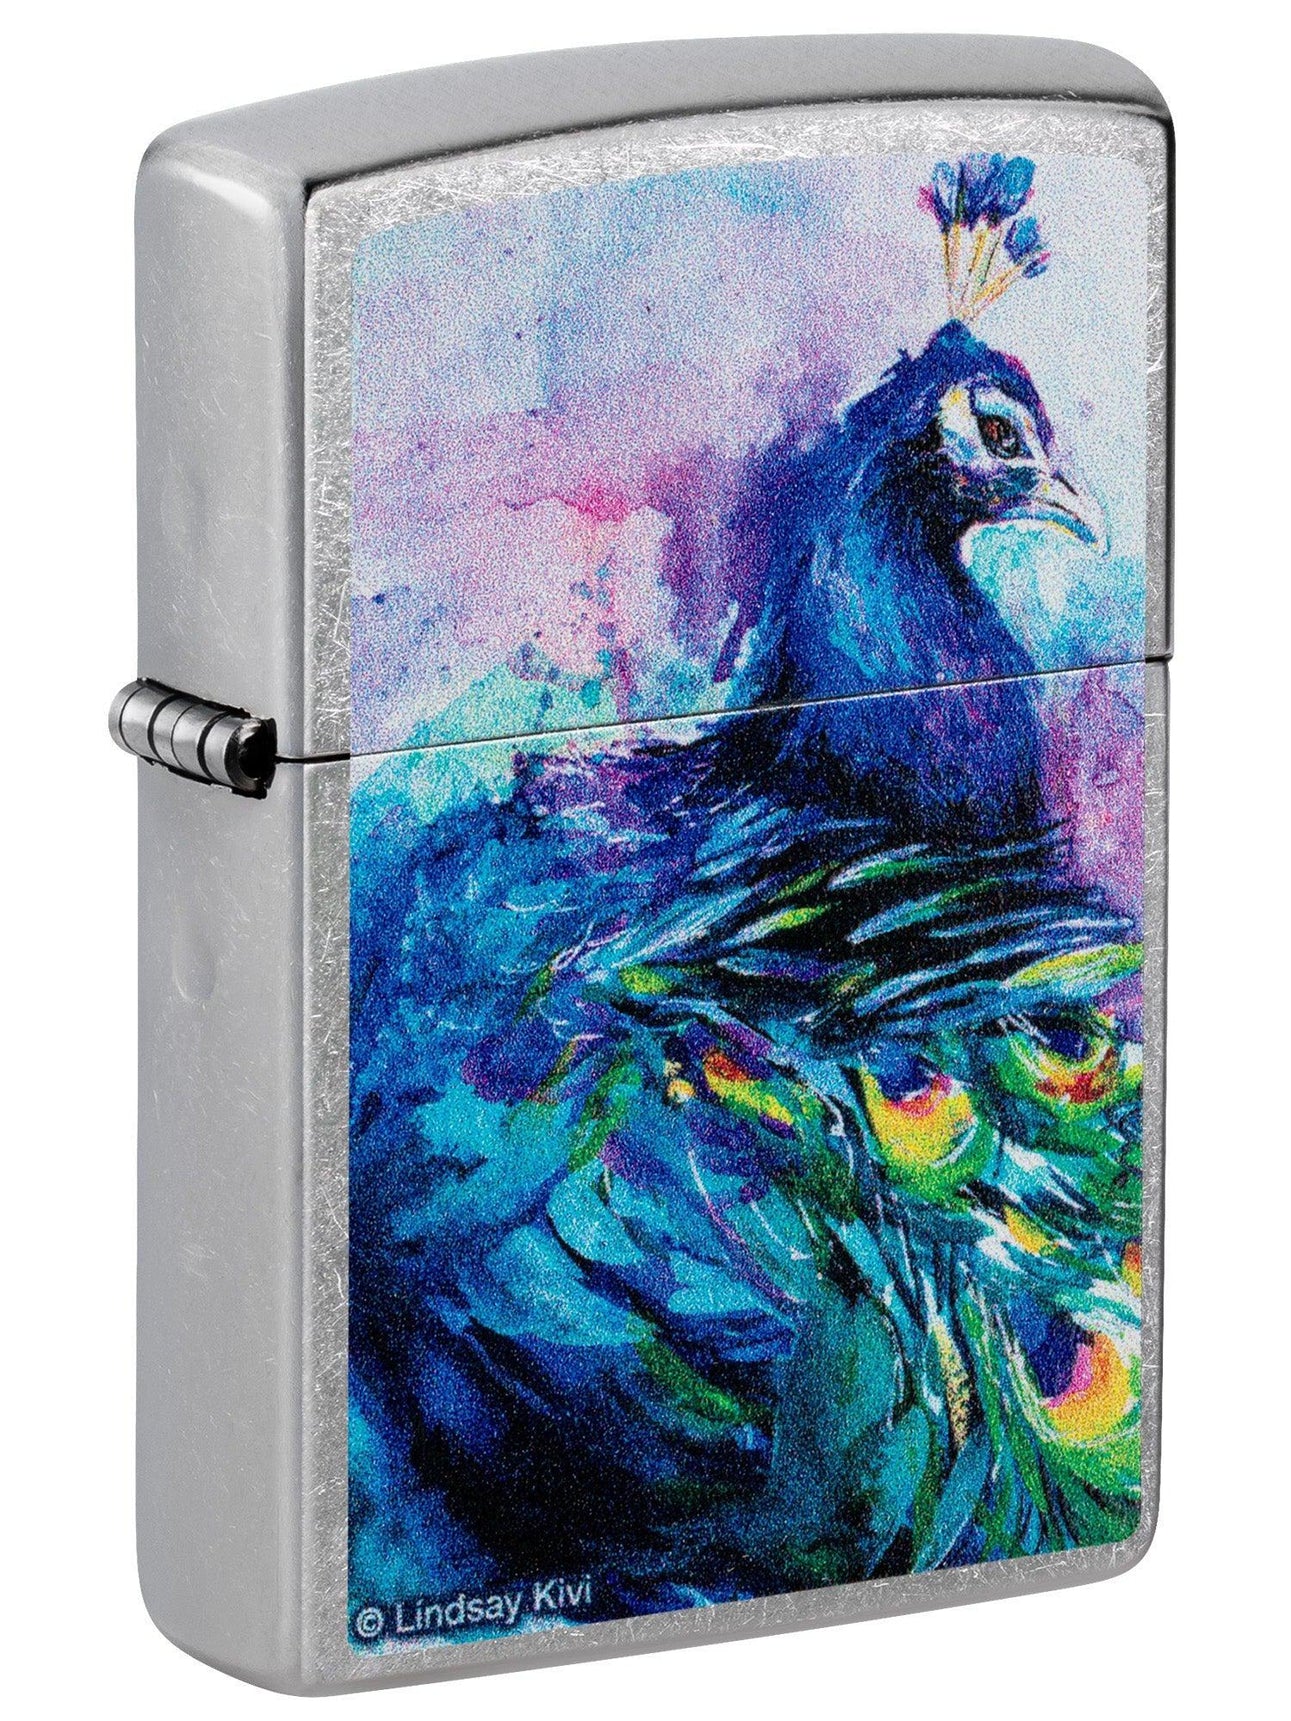 Zippo Lighter: Peacock by Lindsay Kivi - Street Chrome 81525